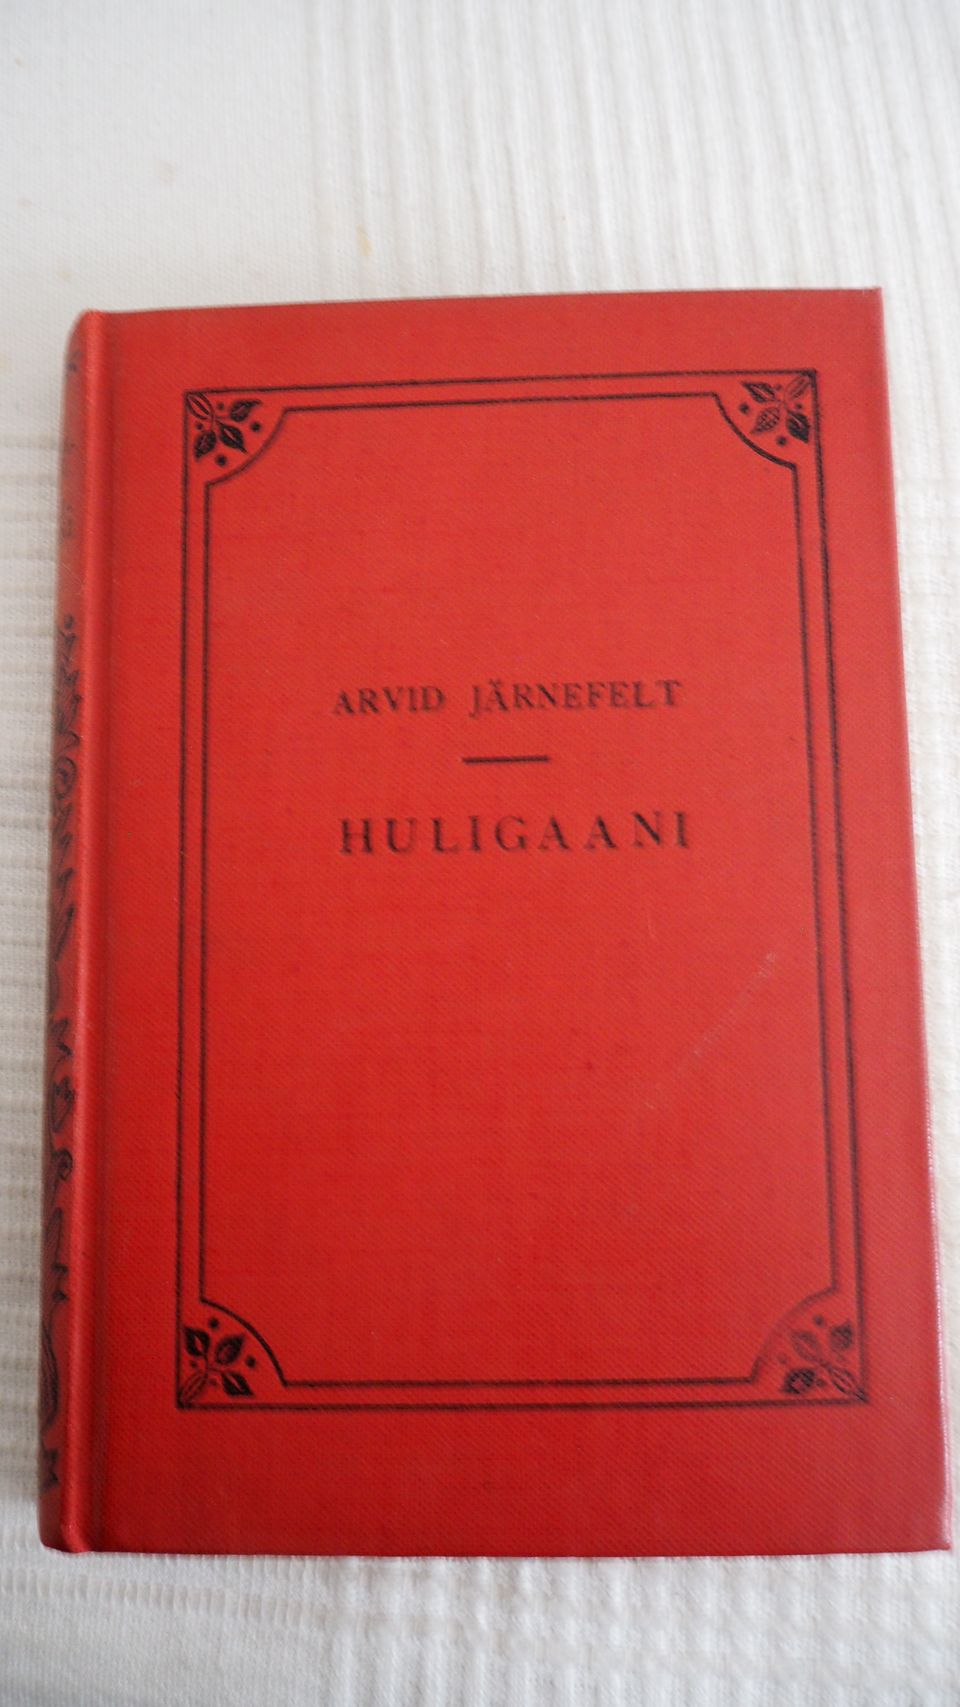 Arvid Järnefelt:HULIGAANI ynnä muita kertoelmia, 1926